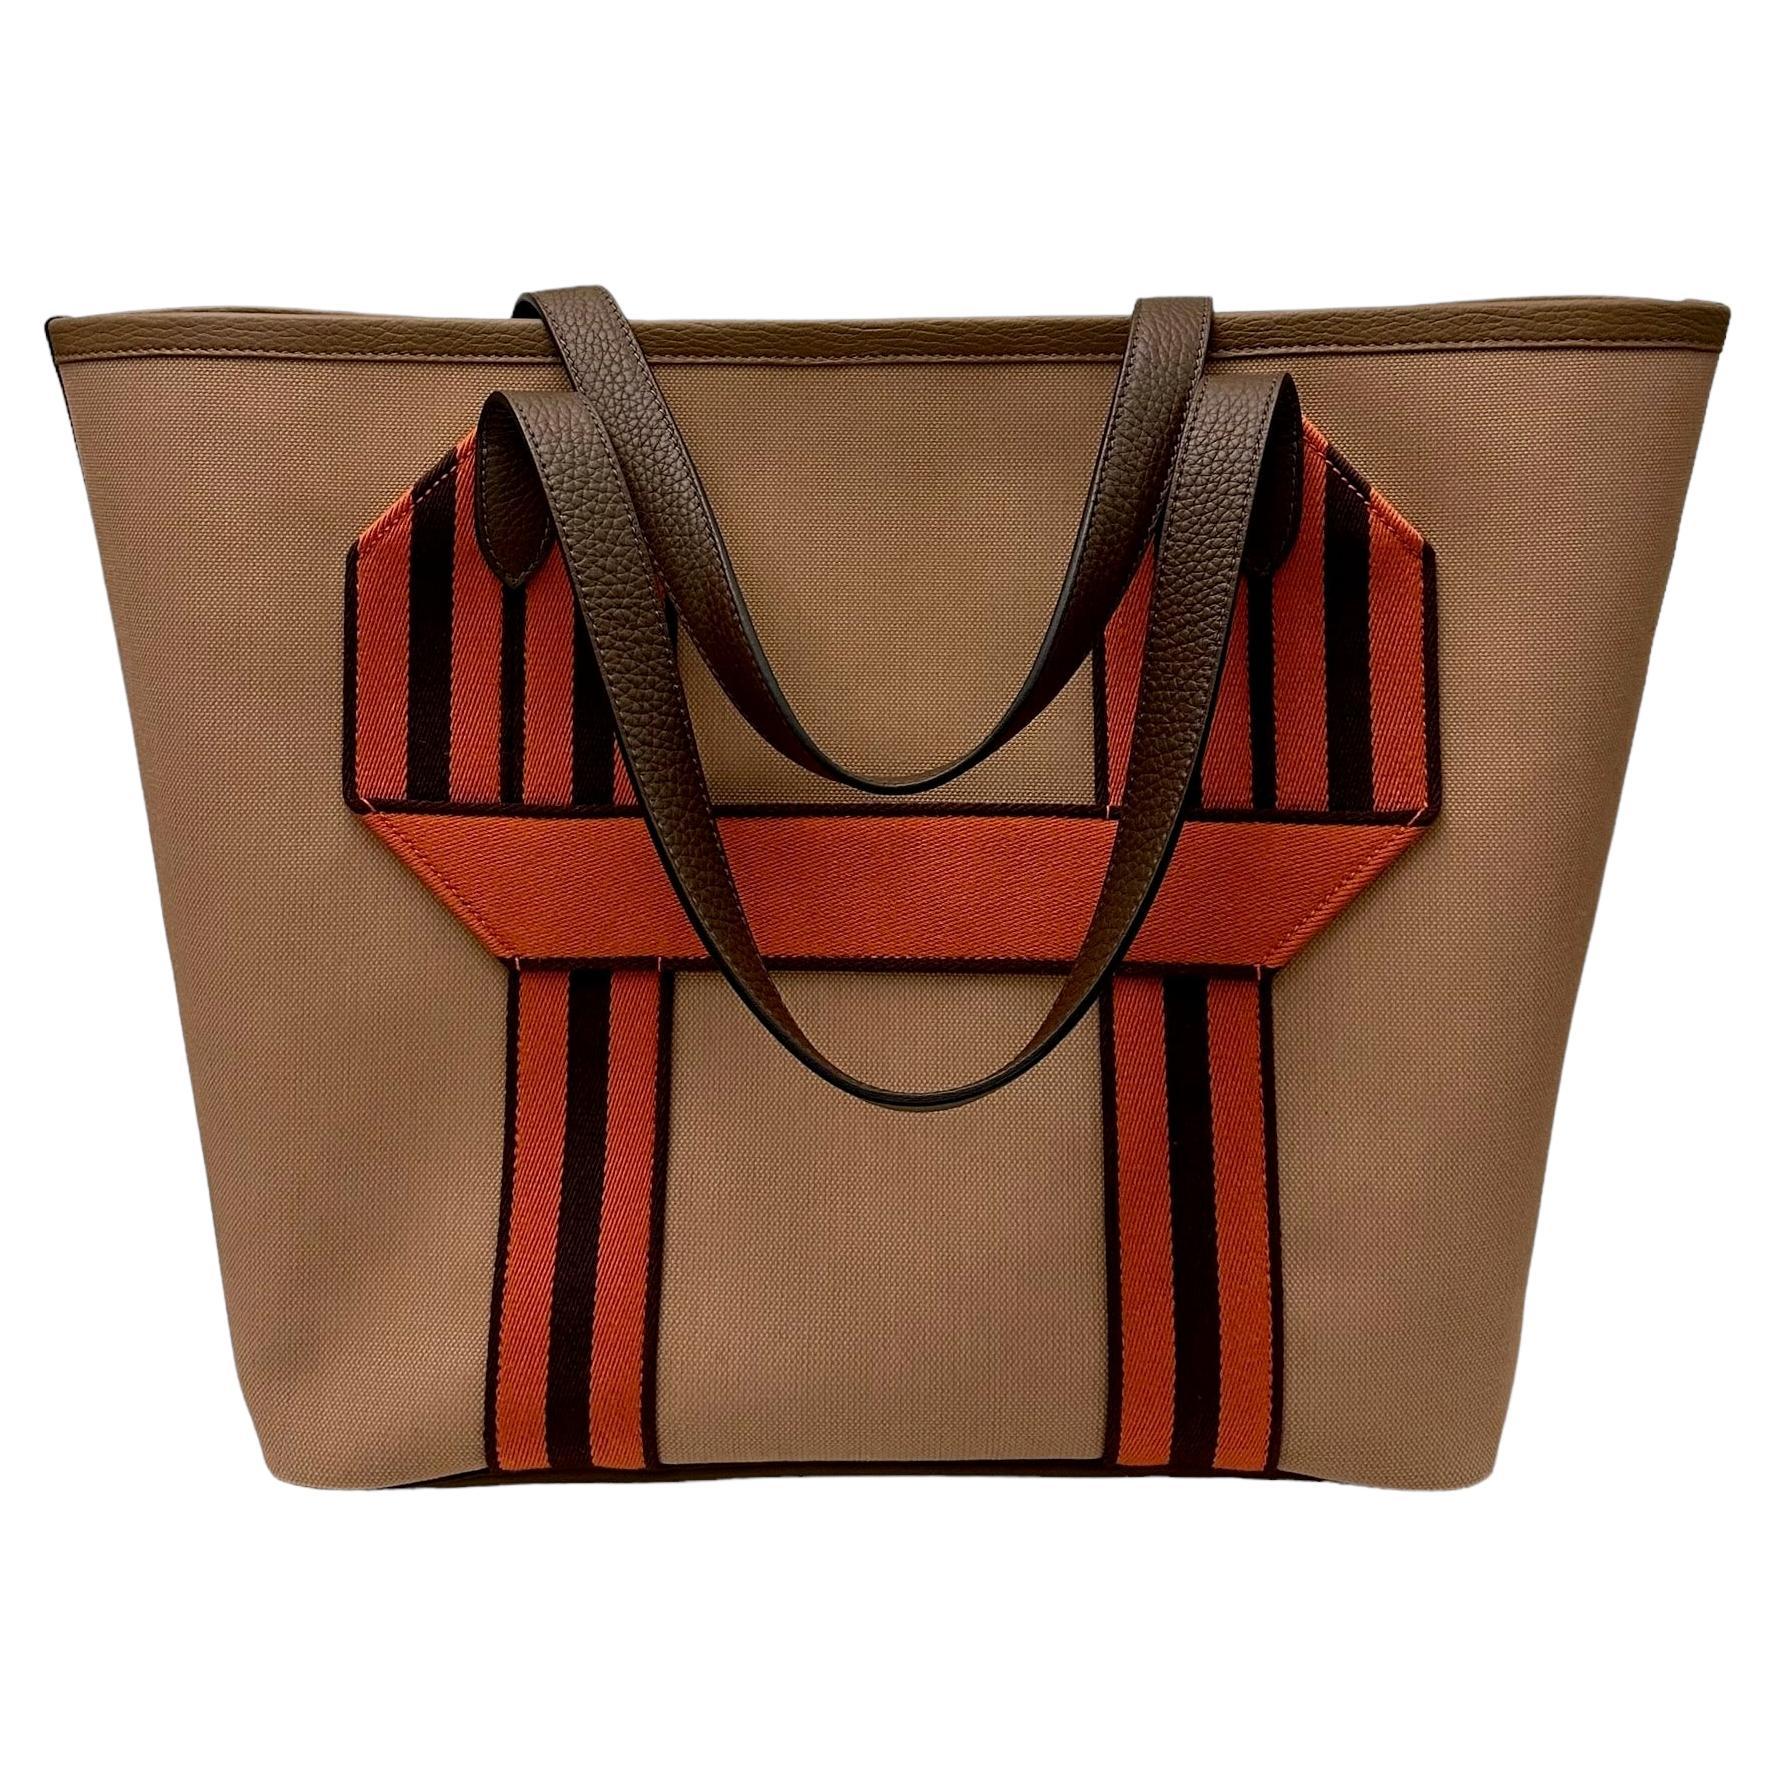 Hermès Pursangle Tote Bag